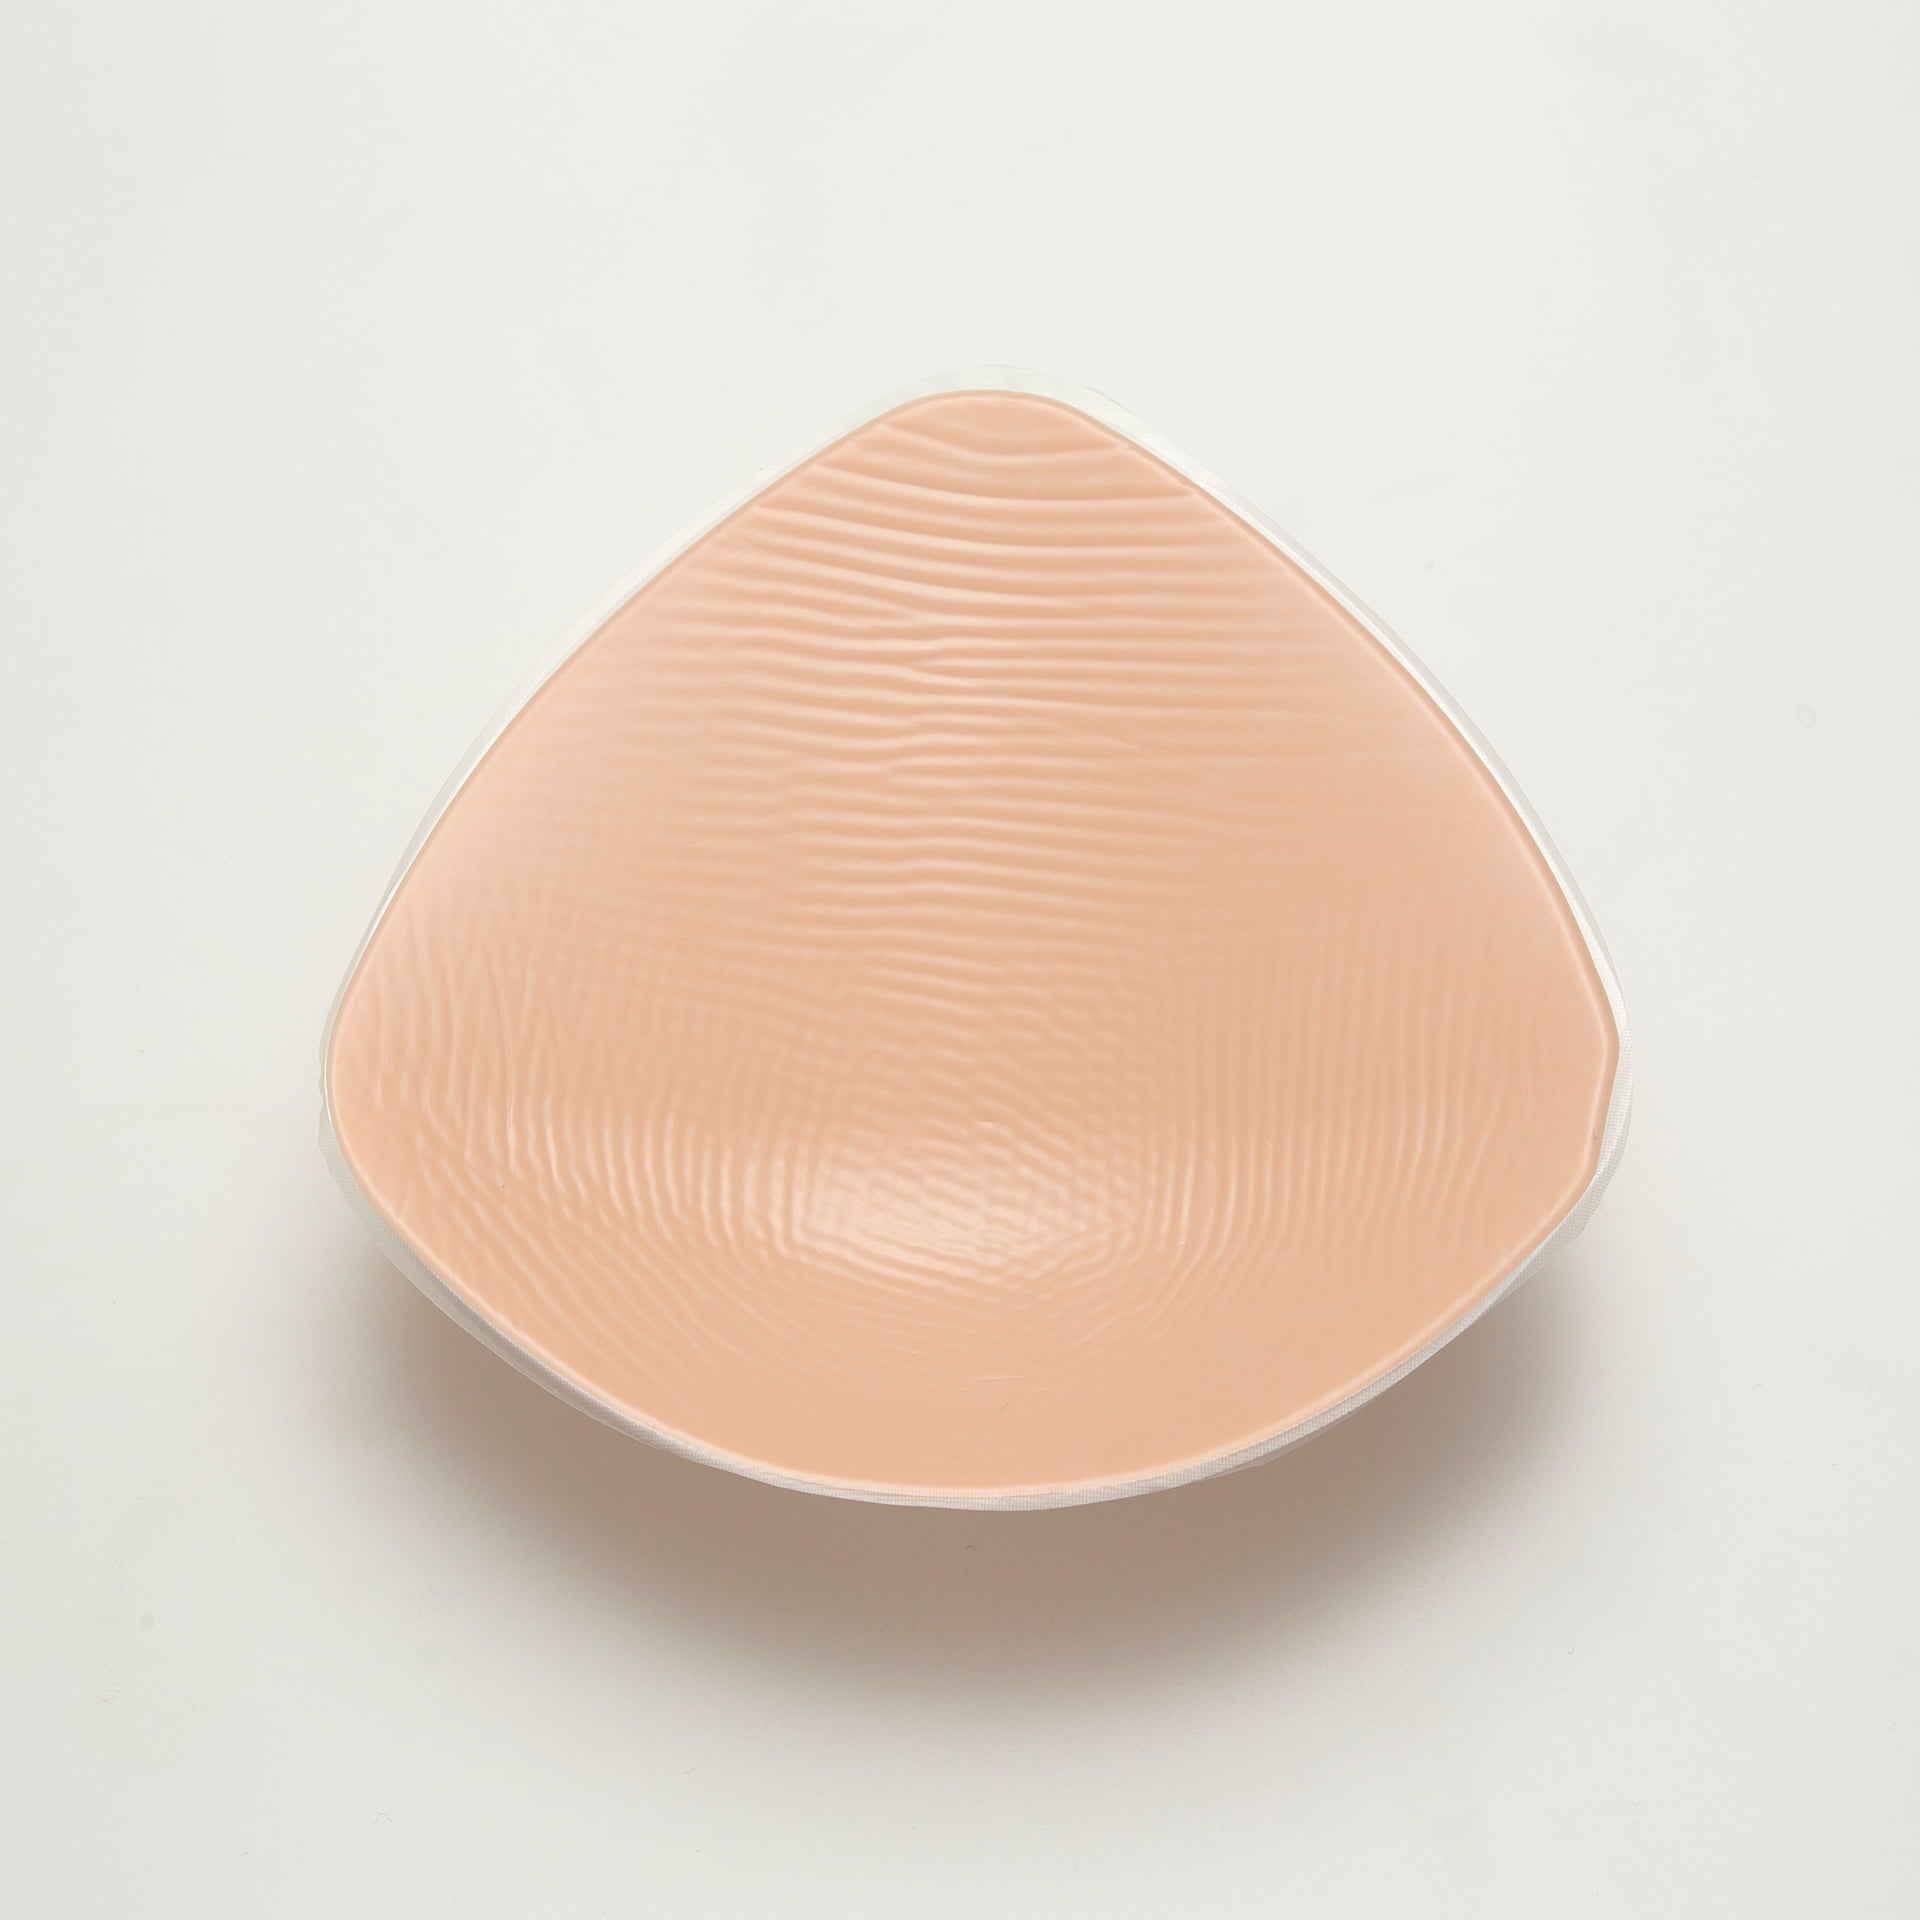 Silicon Breast Form 130g 1 piece